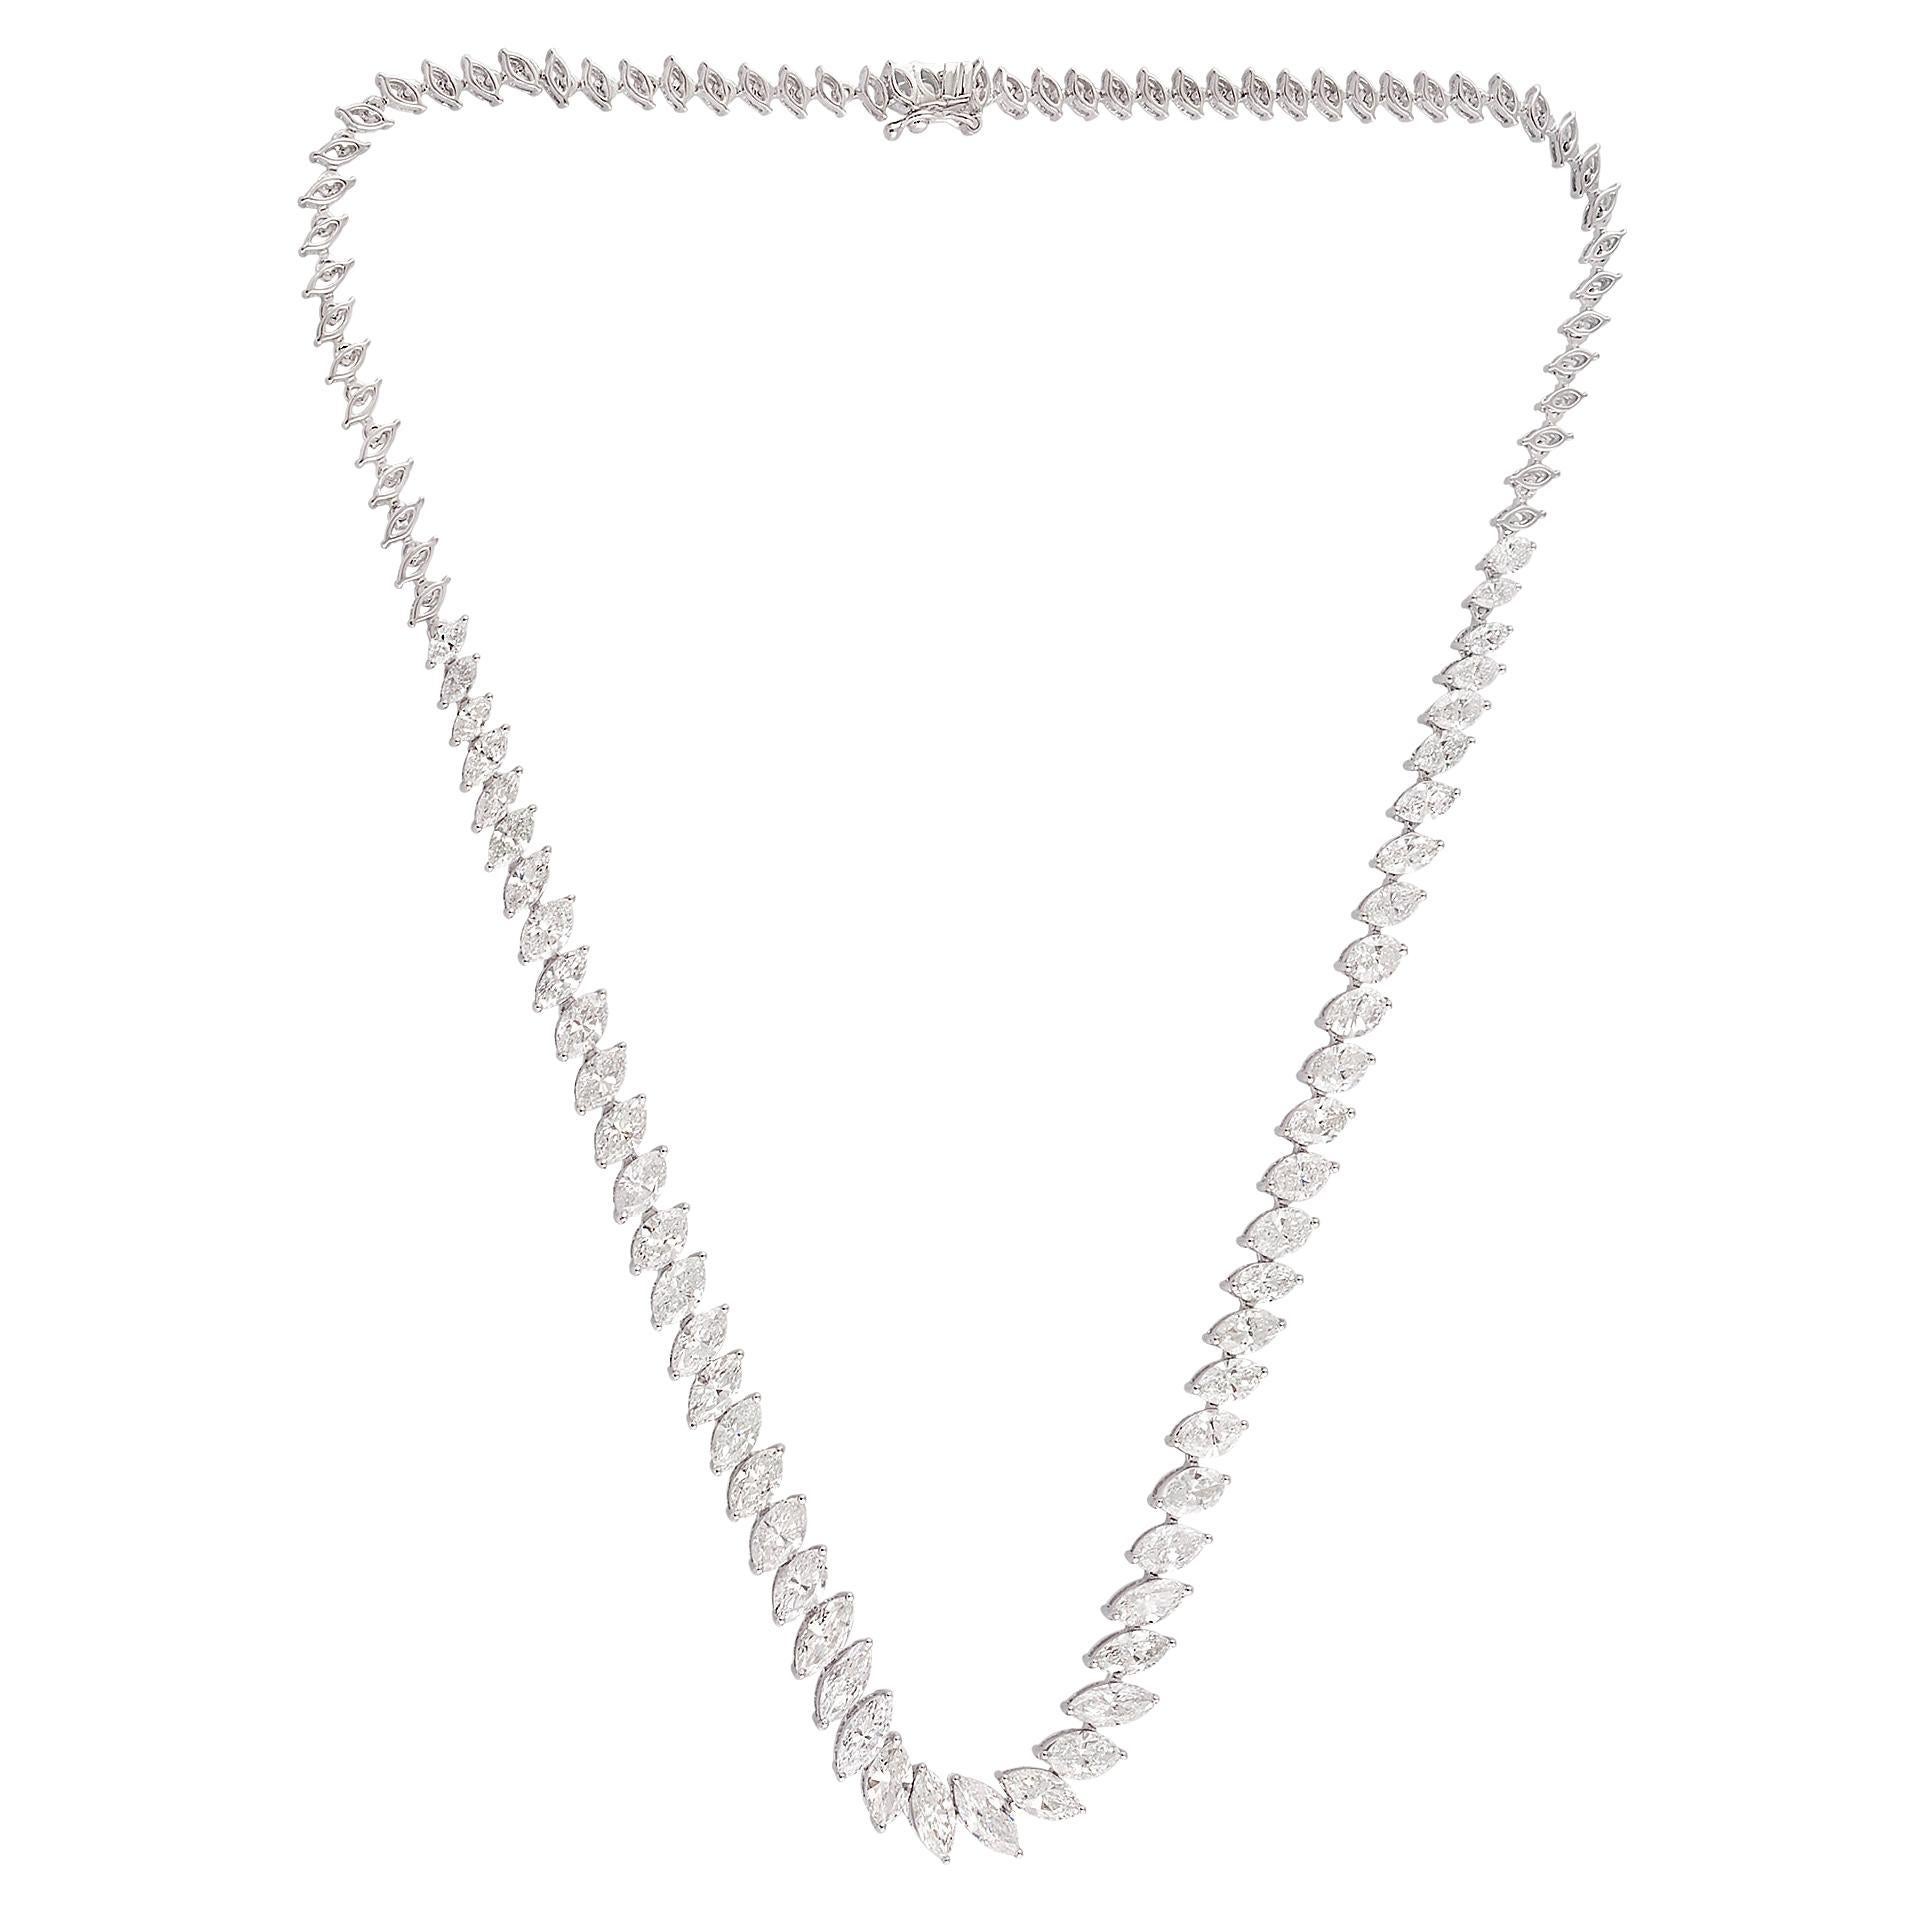 12.60 Carat SI Clarity HI Color Marquise Diamond Necklace 18 Karat White Gold For Sale